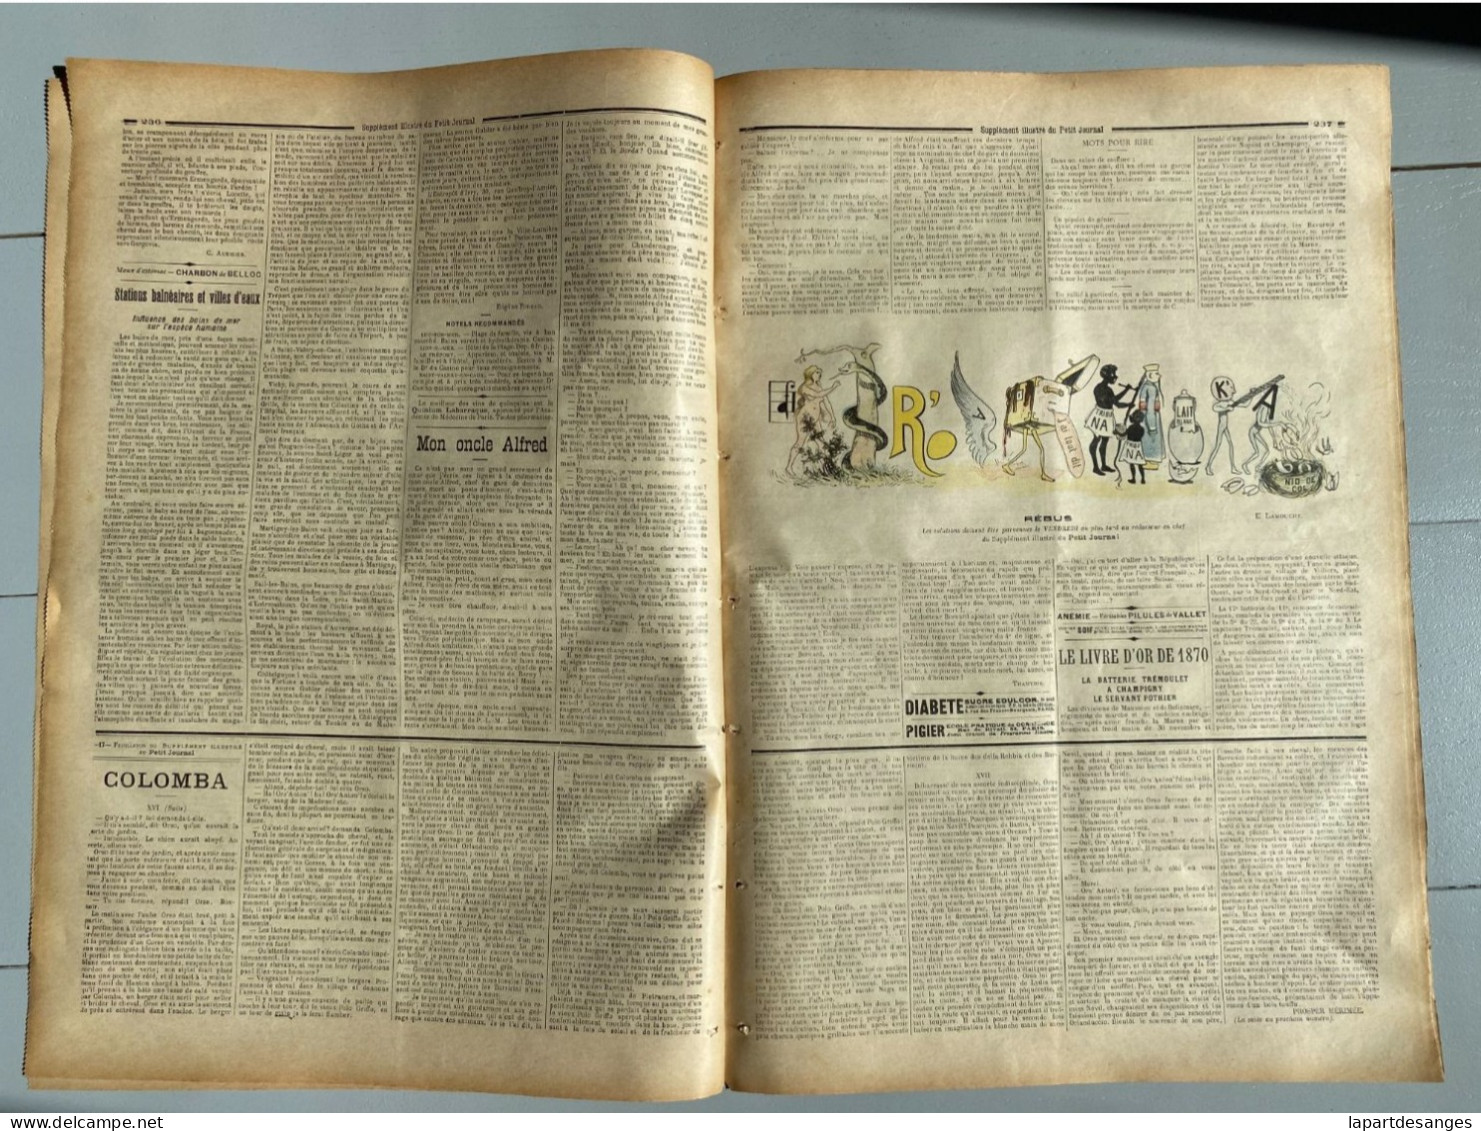 LE PETIT JOURNAL N°297 - 26 JUILLET 1896 - VICE ROI LI-HUNG-CHANG - CHINE - CHINA - EVENEMENT EN CRETE - Ohne Zuordnung